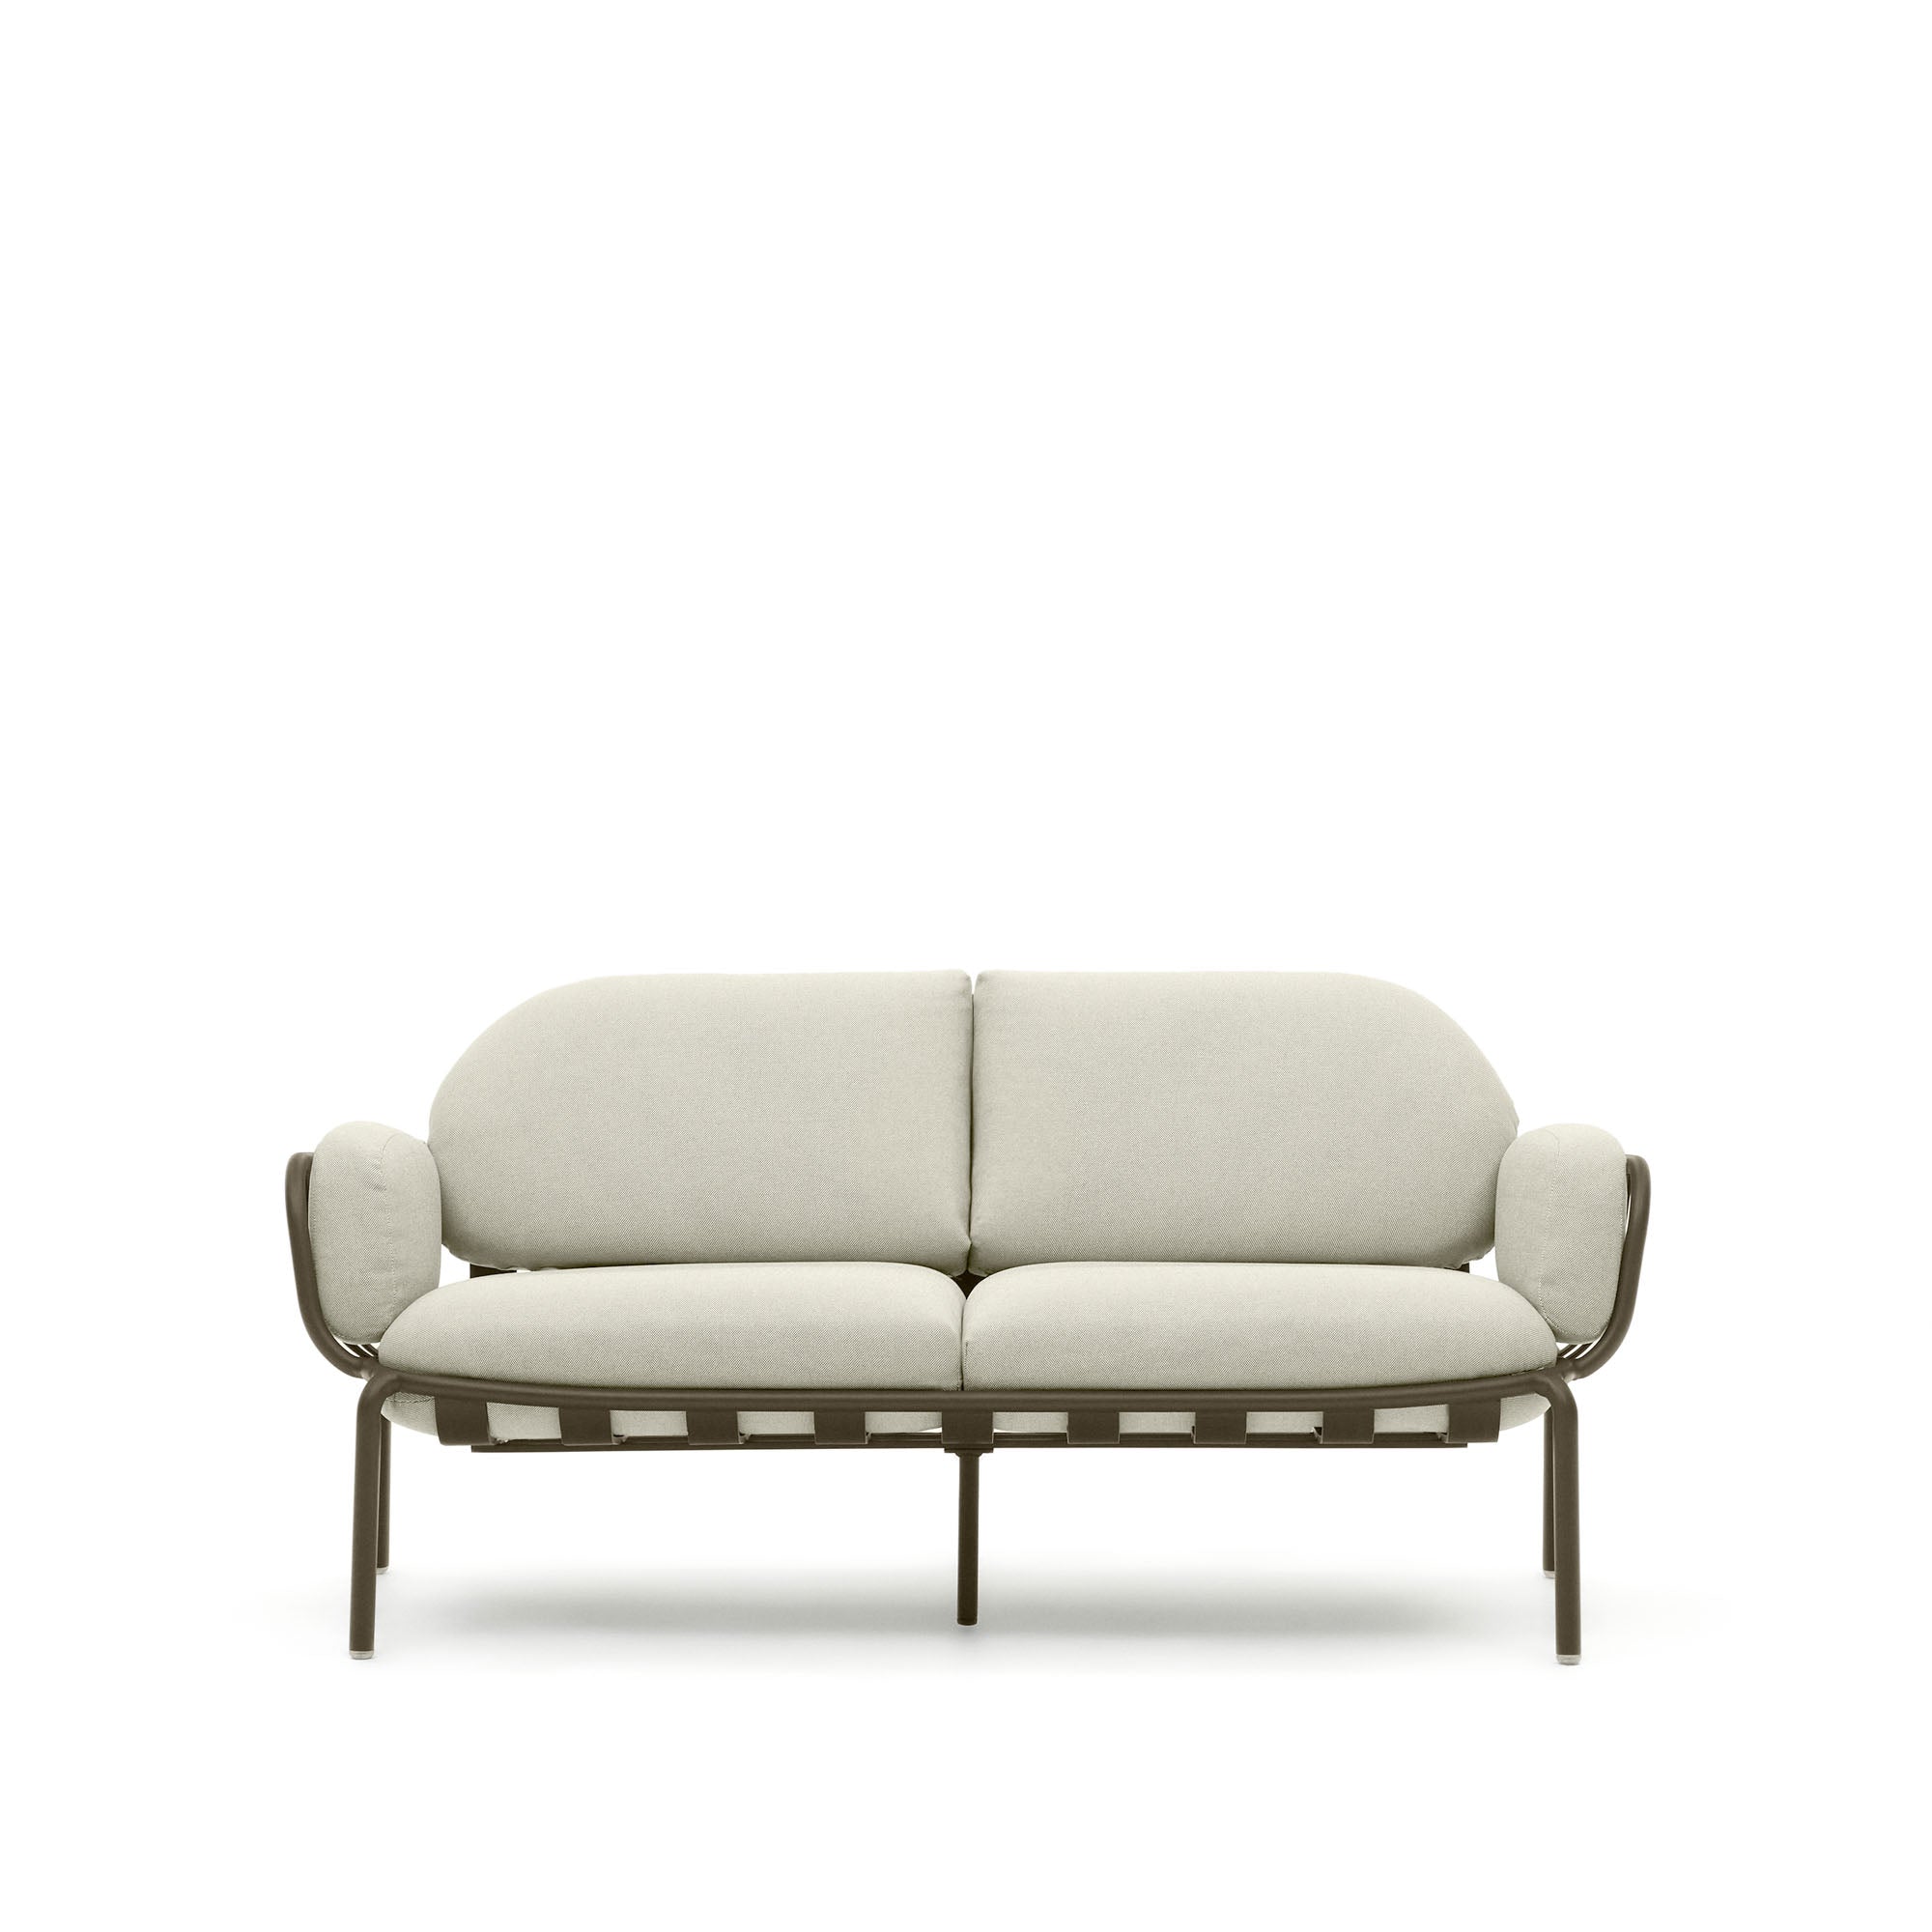 Joncols outdoor aluminium 2 seater sofa with powder coated green finish, 165 cm